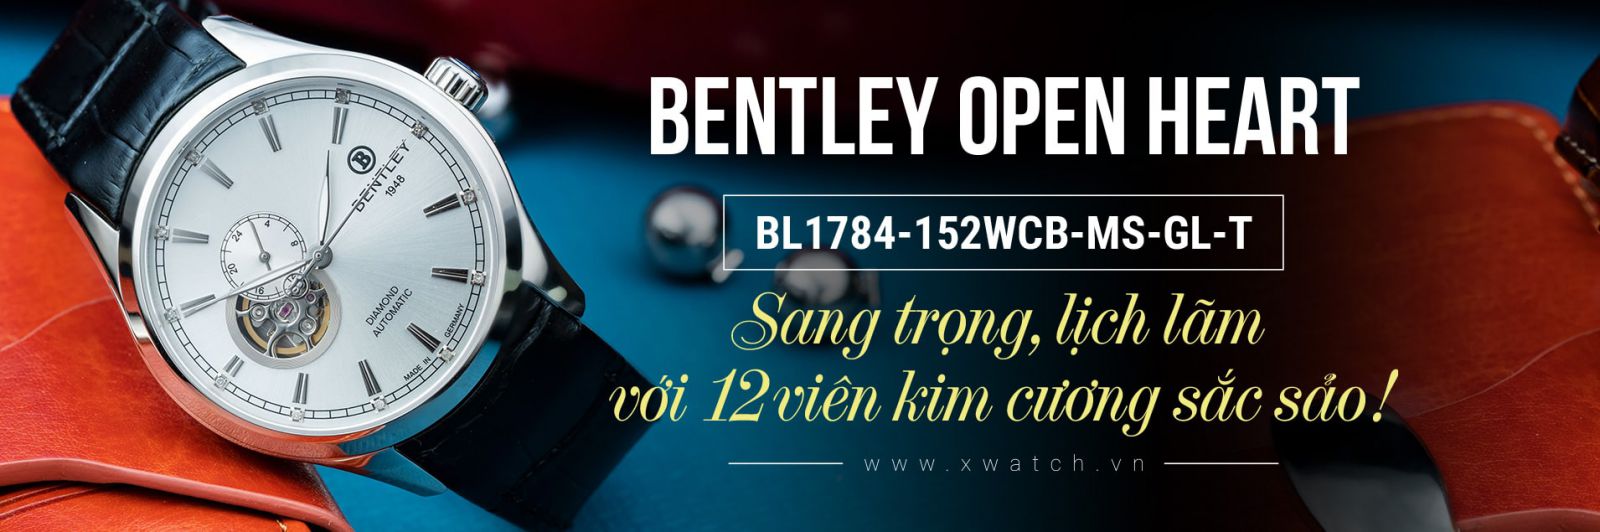 Đồng hồ Bentley BL1784-152WCB-MS-GL-T